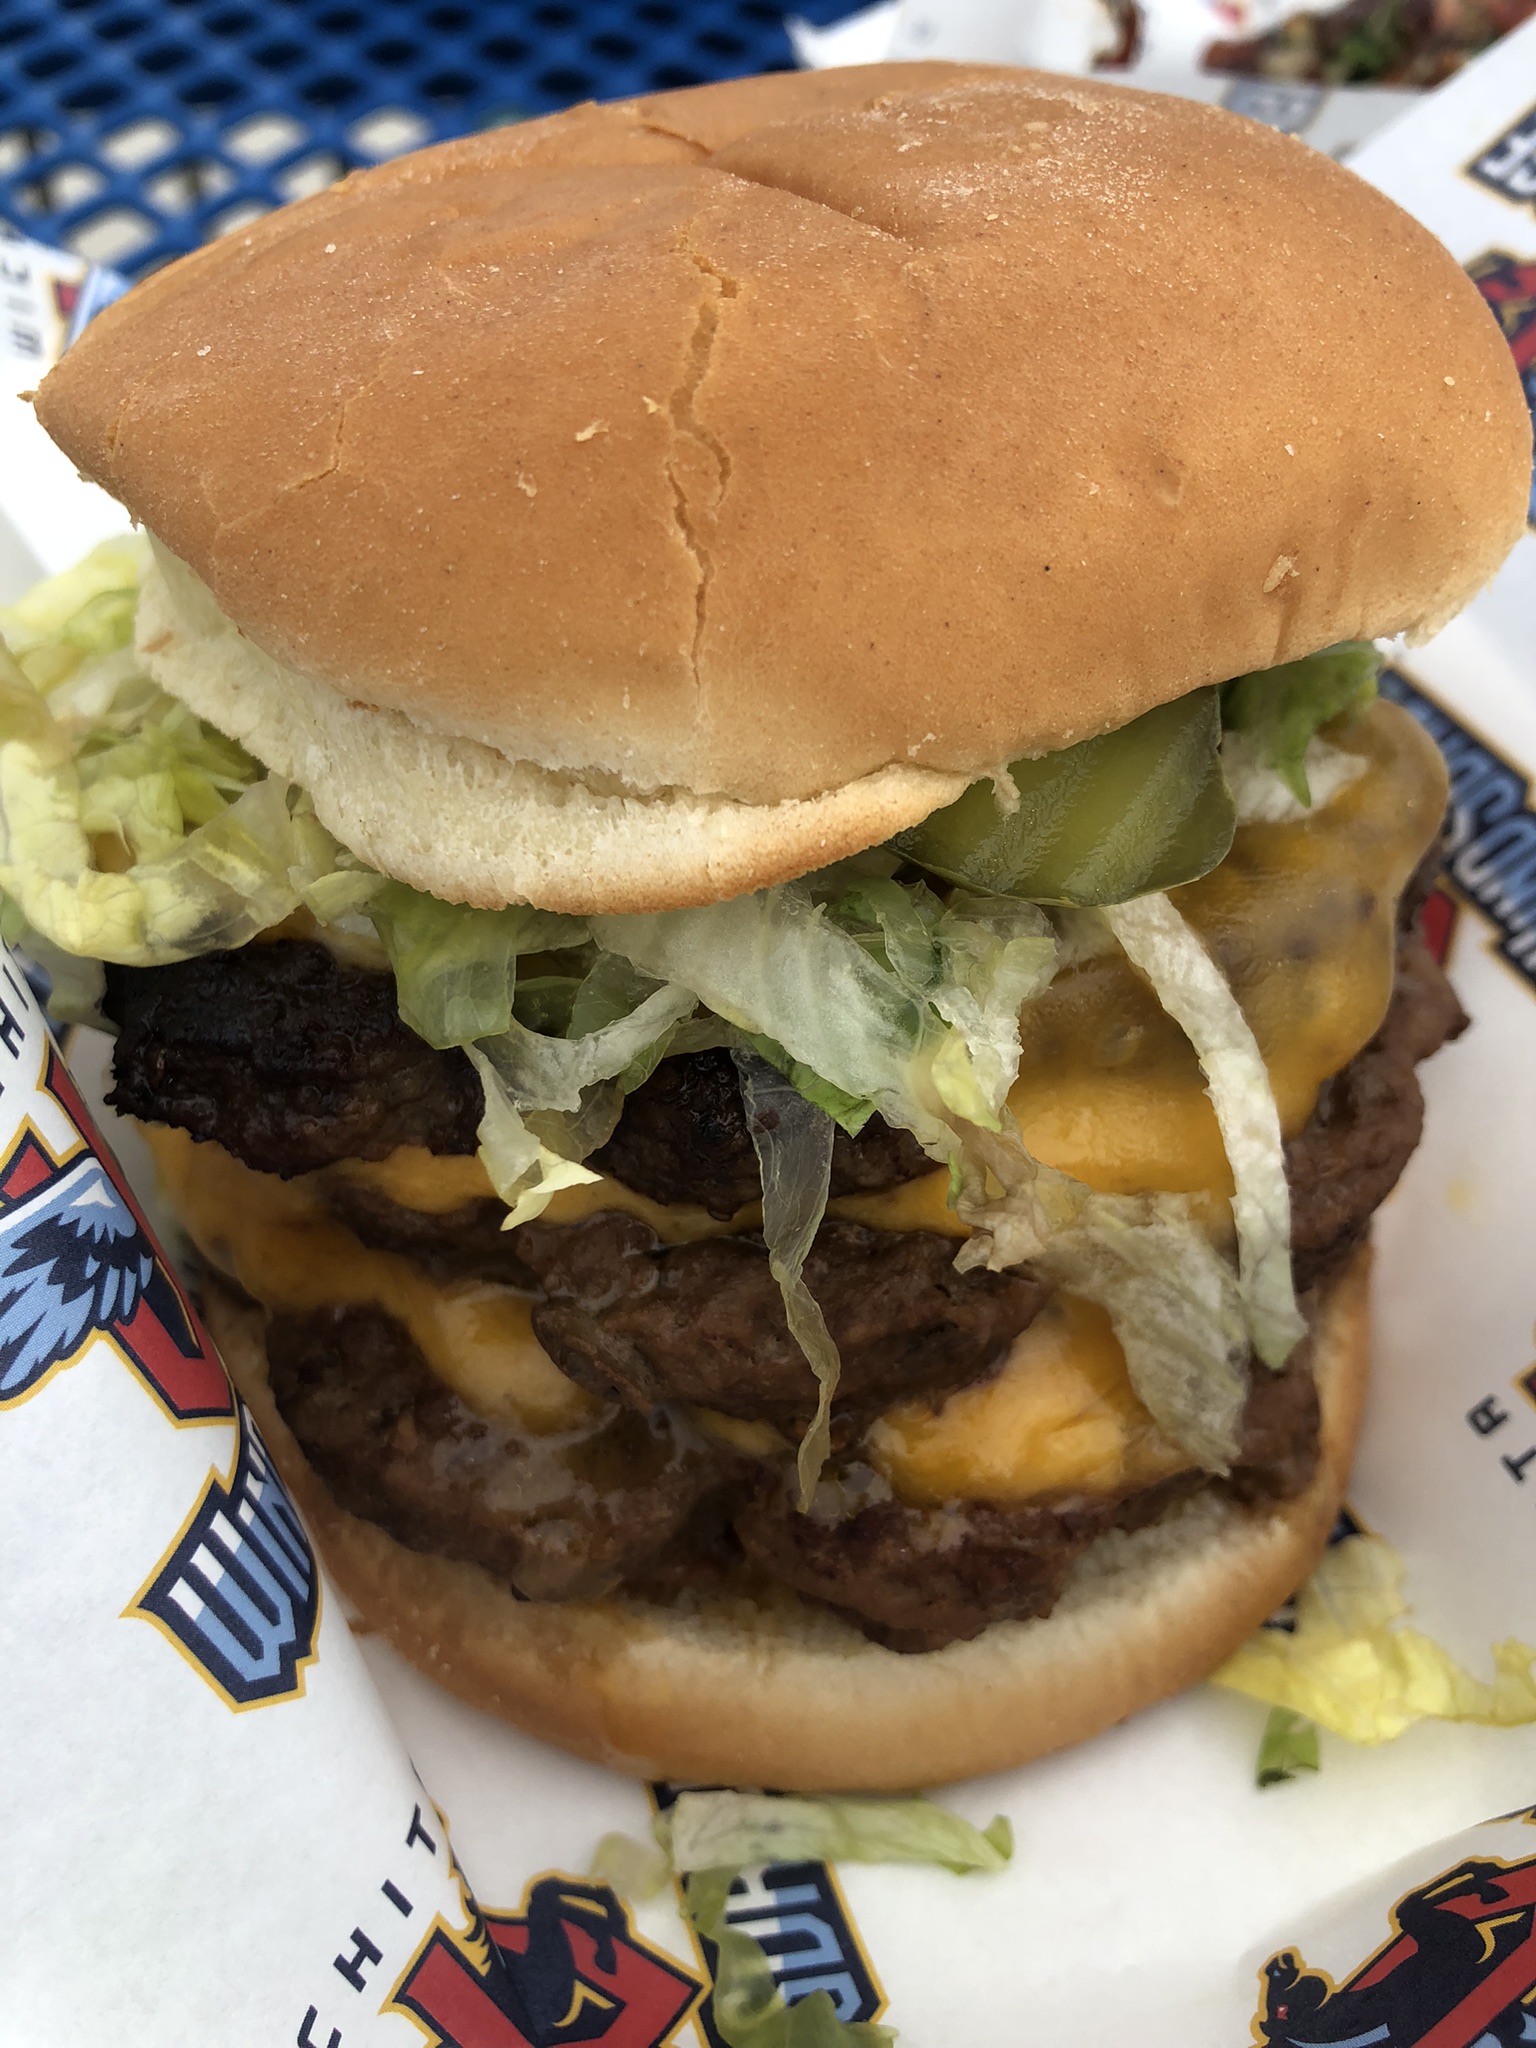 Wichita's Grand Slam Burger